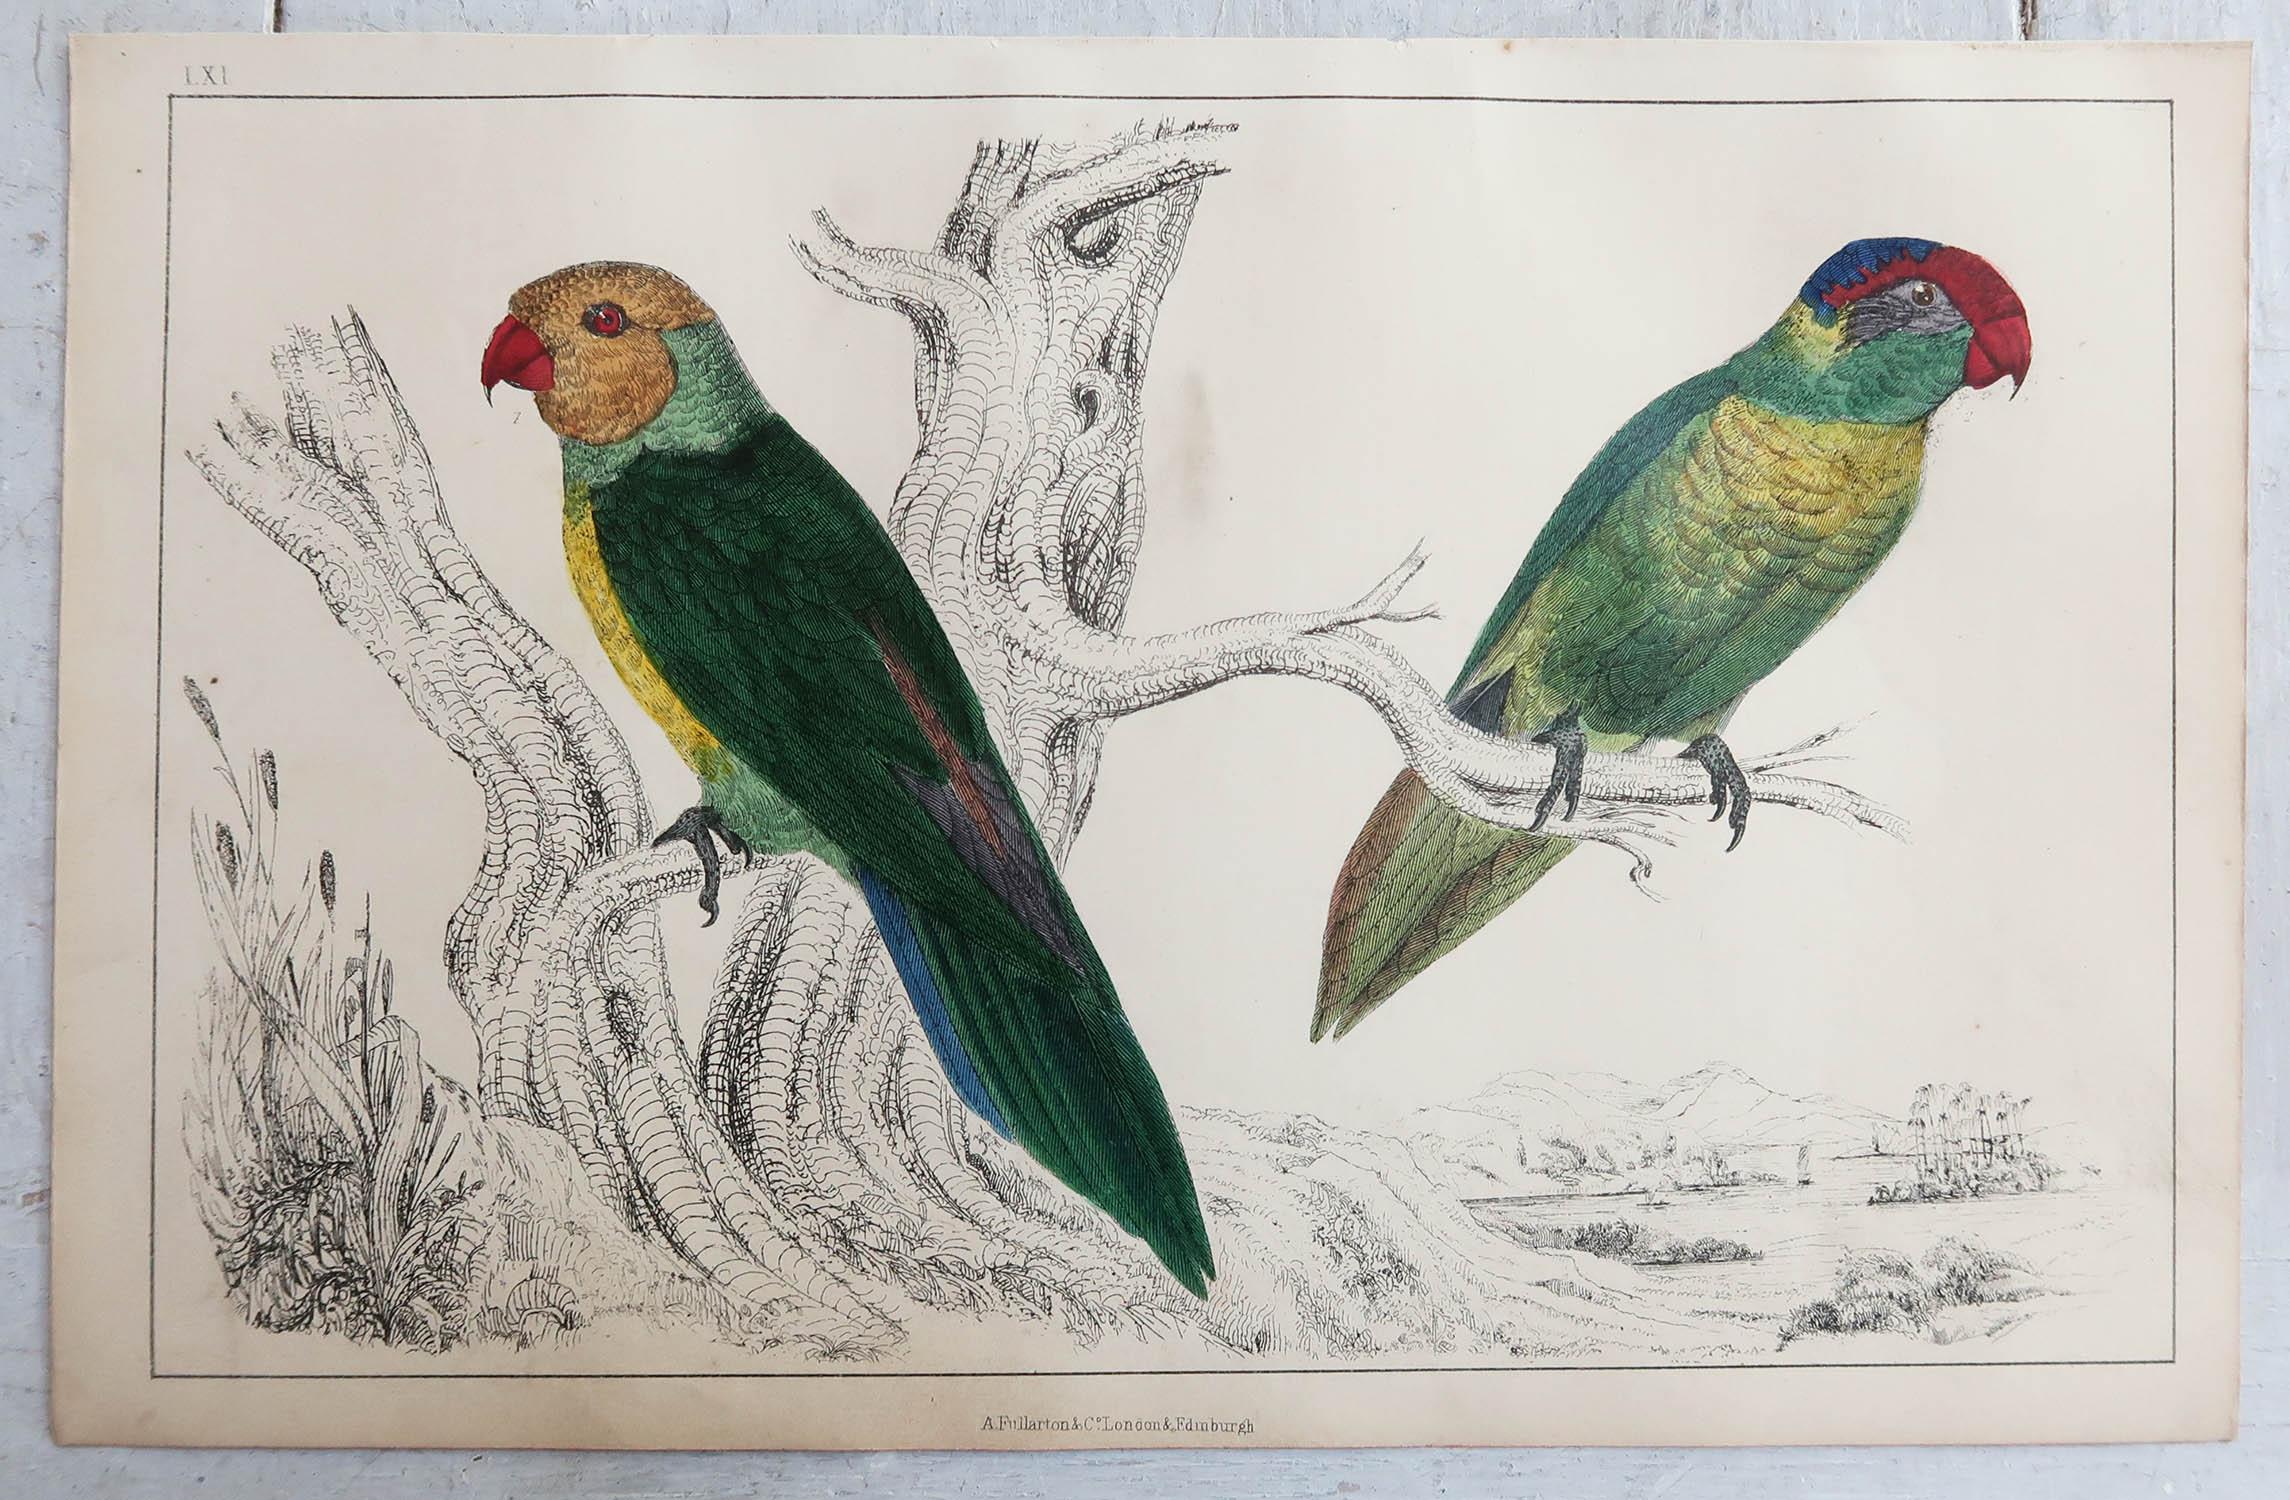 English Original Antique Print of Parrots, circa 1850, 'Unframed'